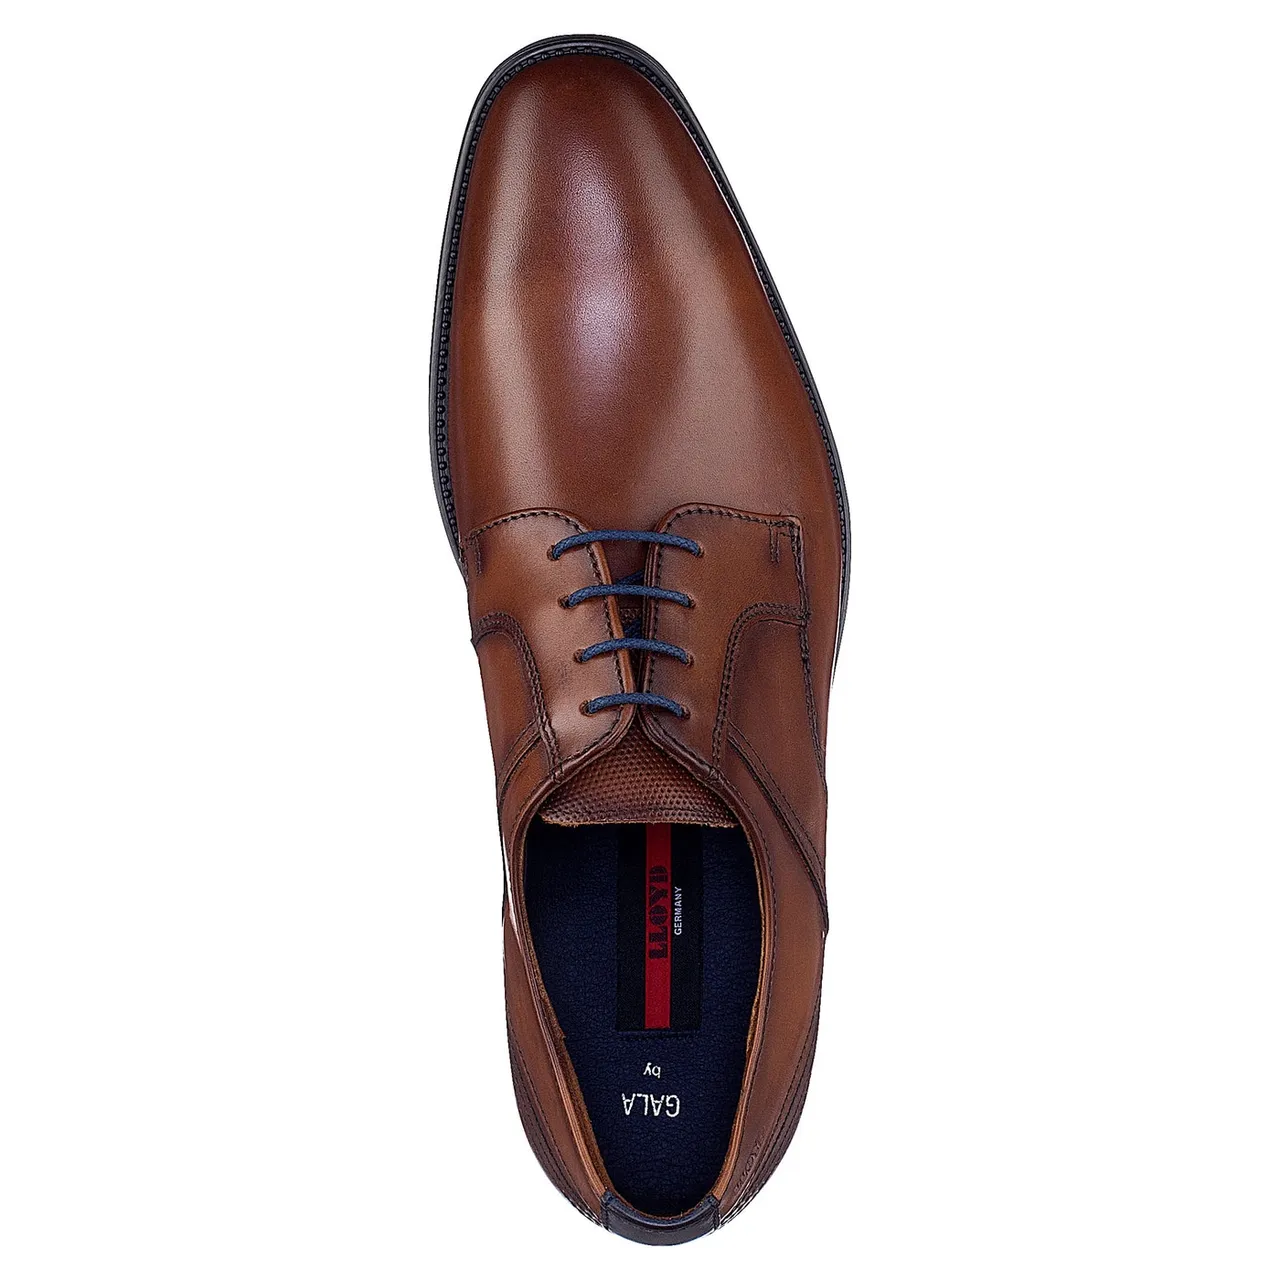 Business Schuhe braun Gala 48,5